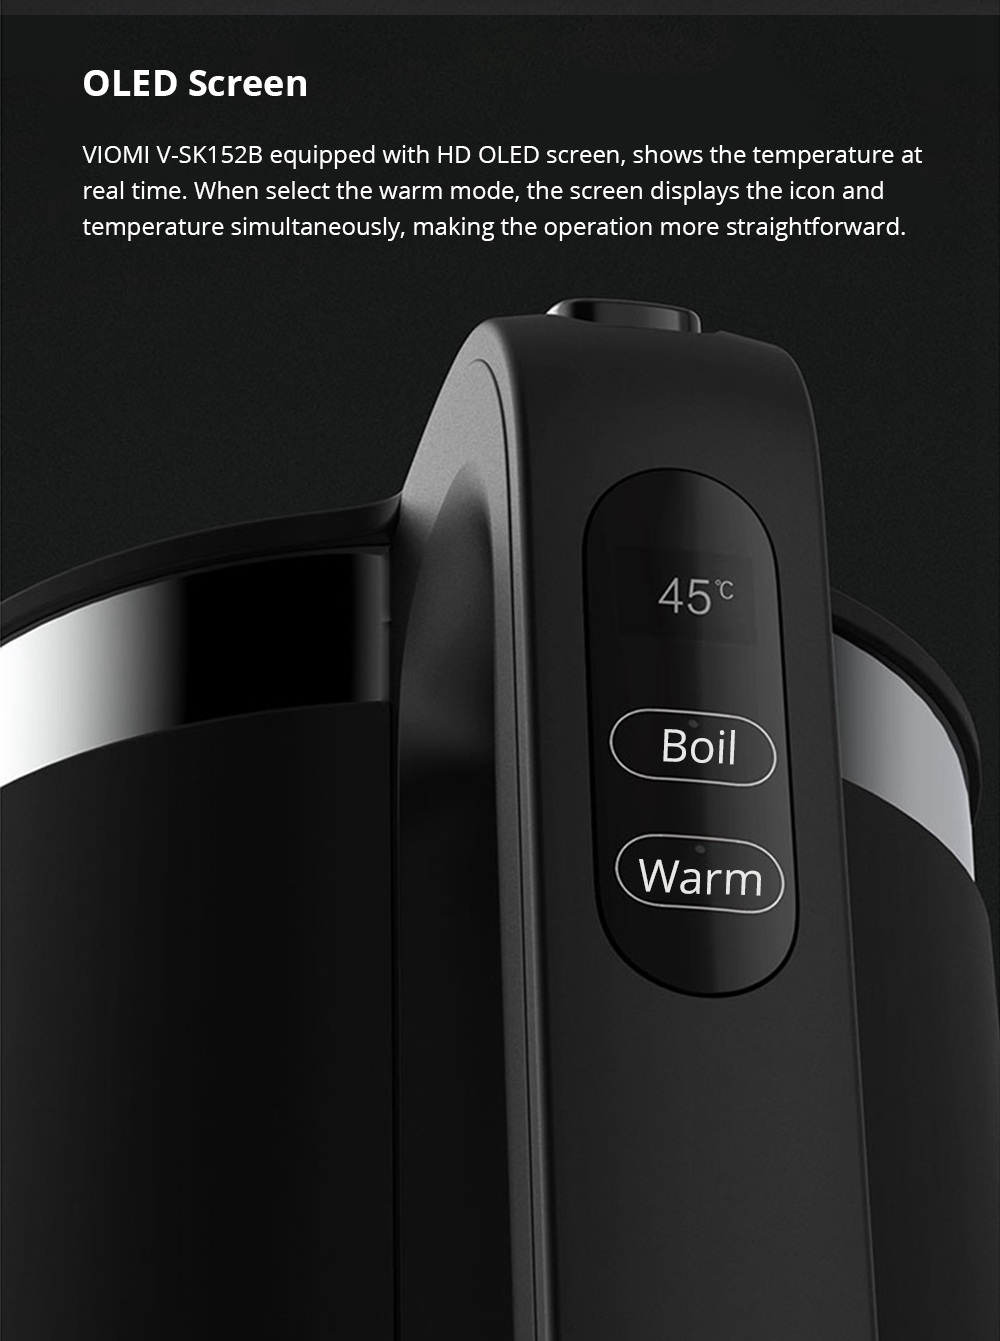 Электрочайник Xiaomi Viomi Smart Kettle